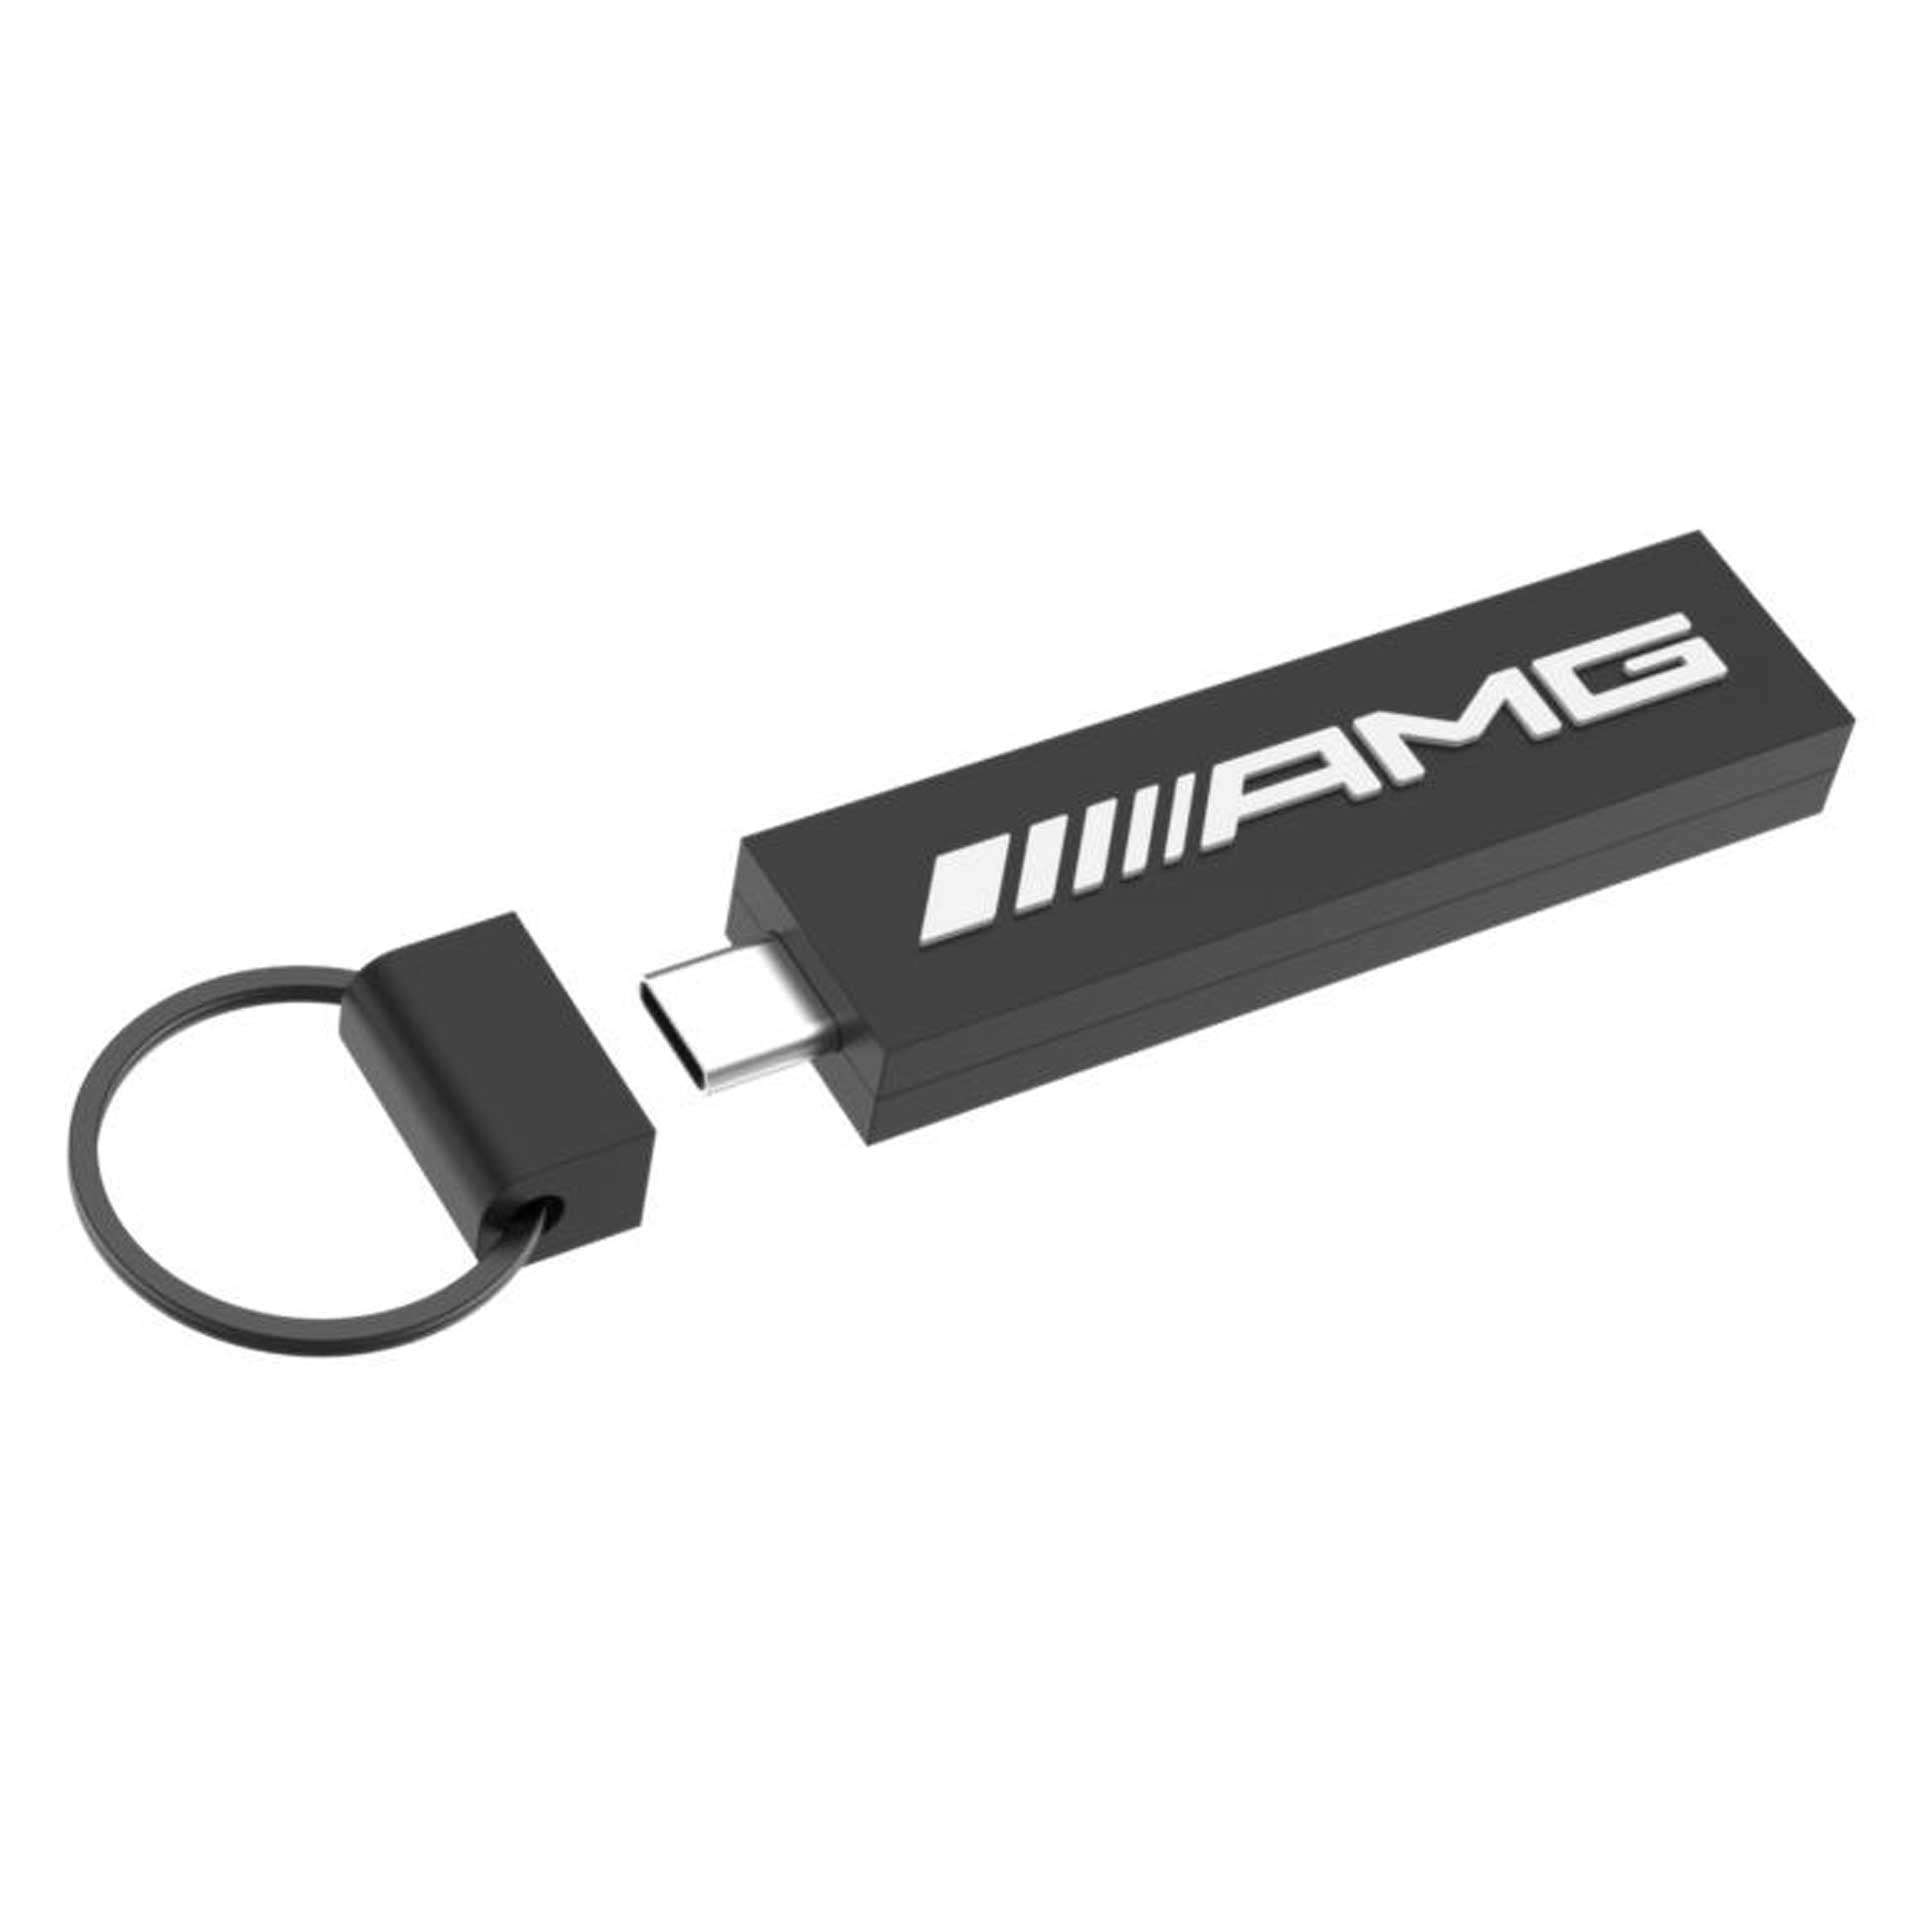 Mercedes-AMG USB-C-Stick 32 GB schwarz B6695992339